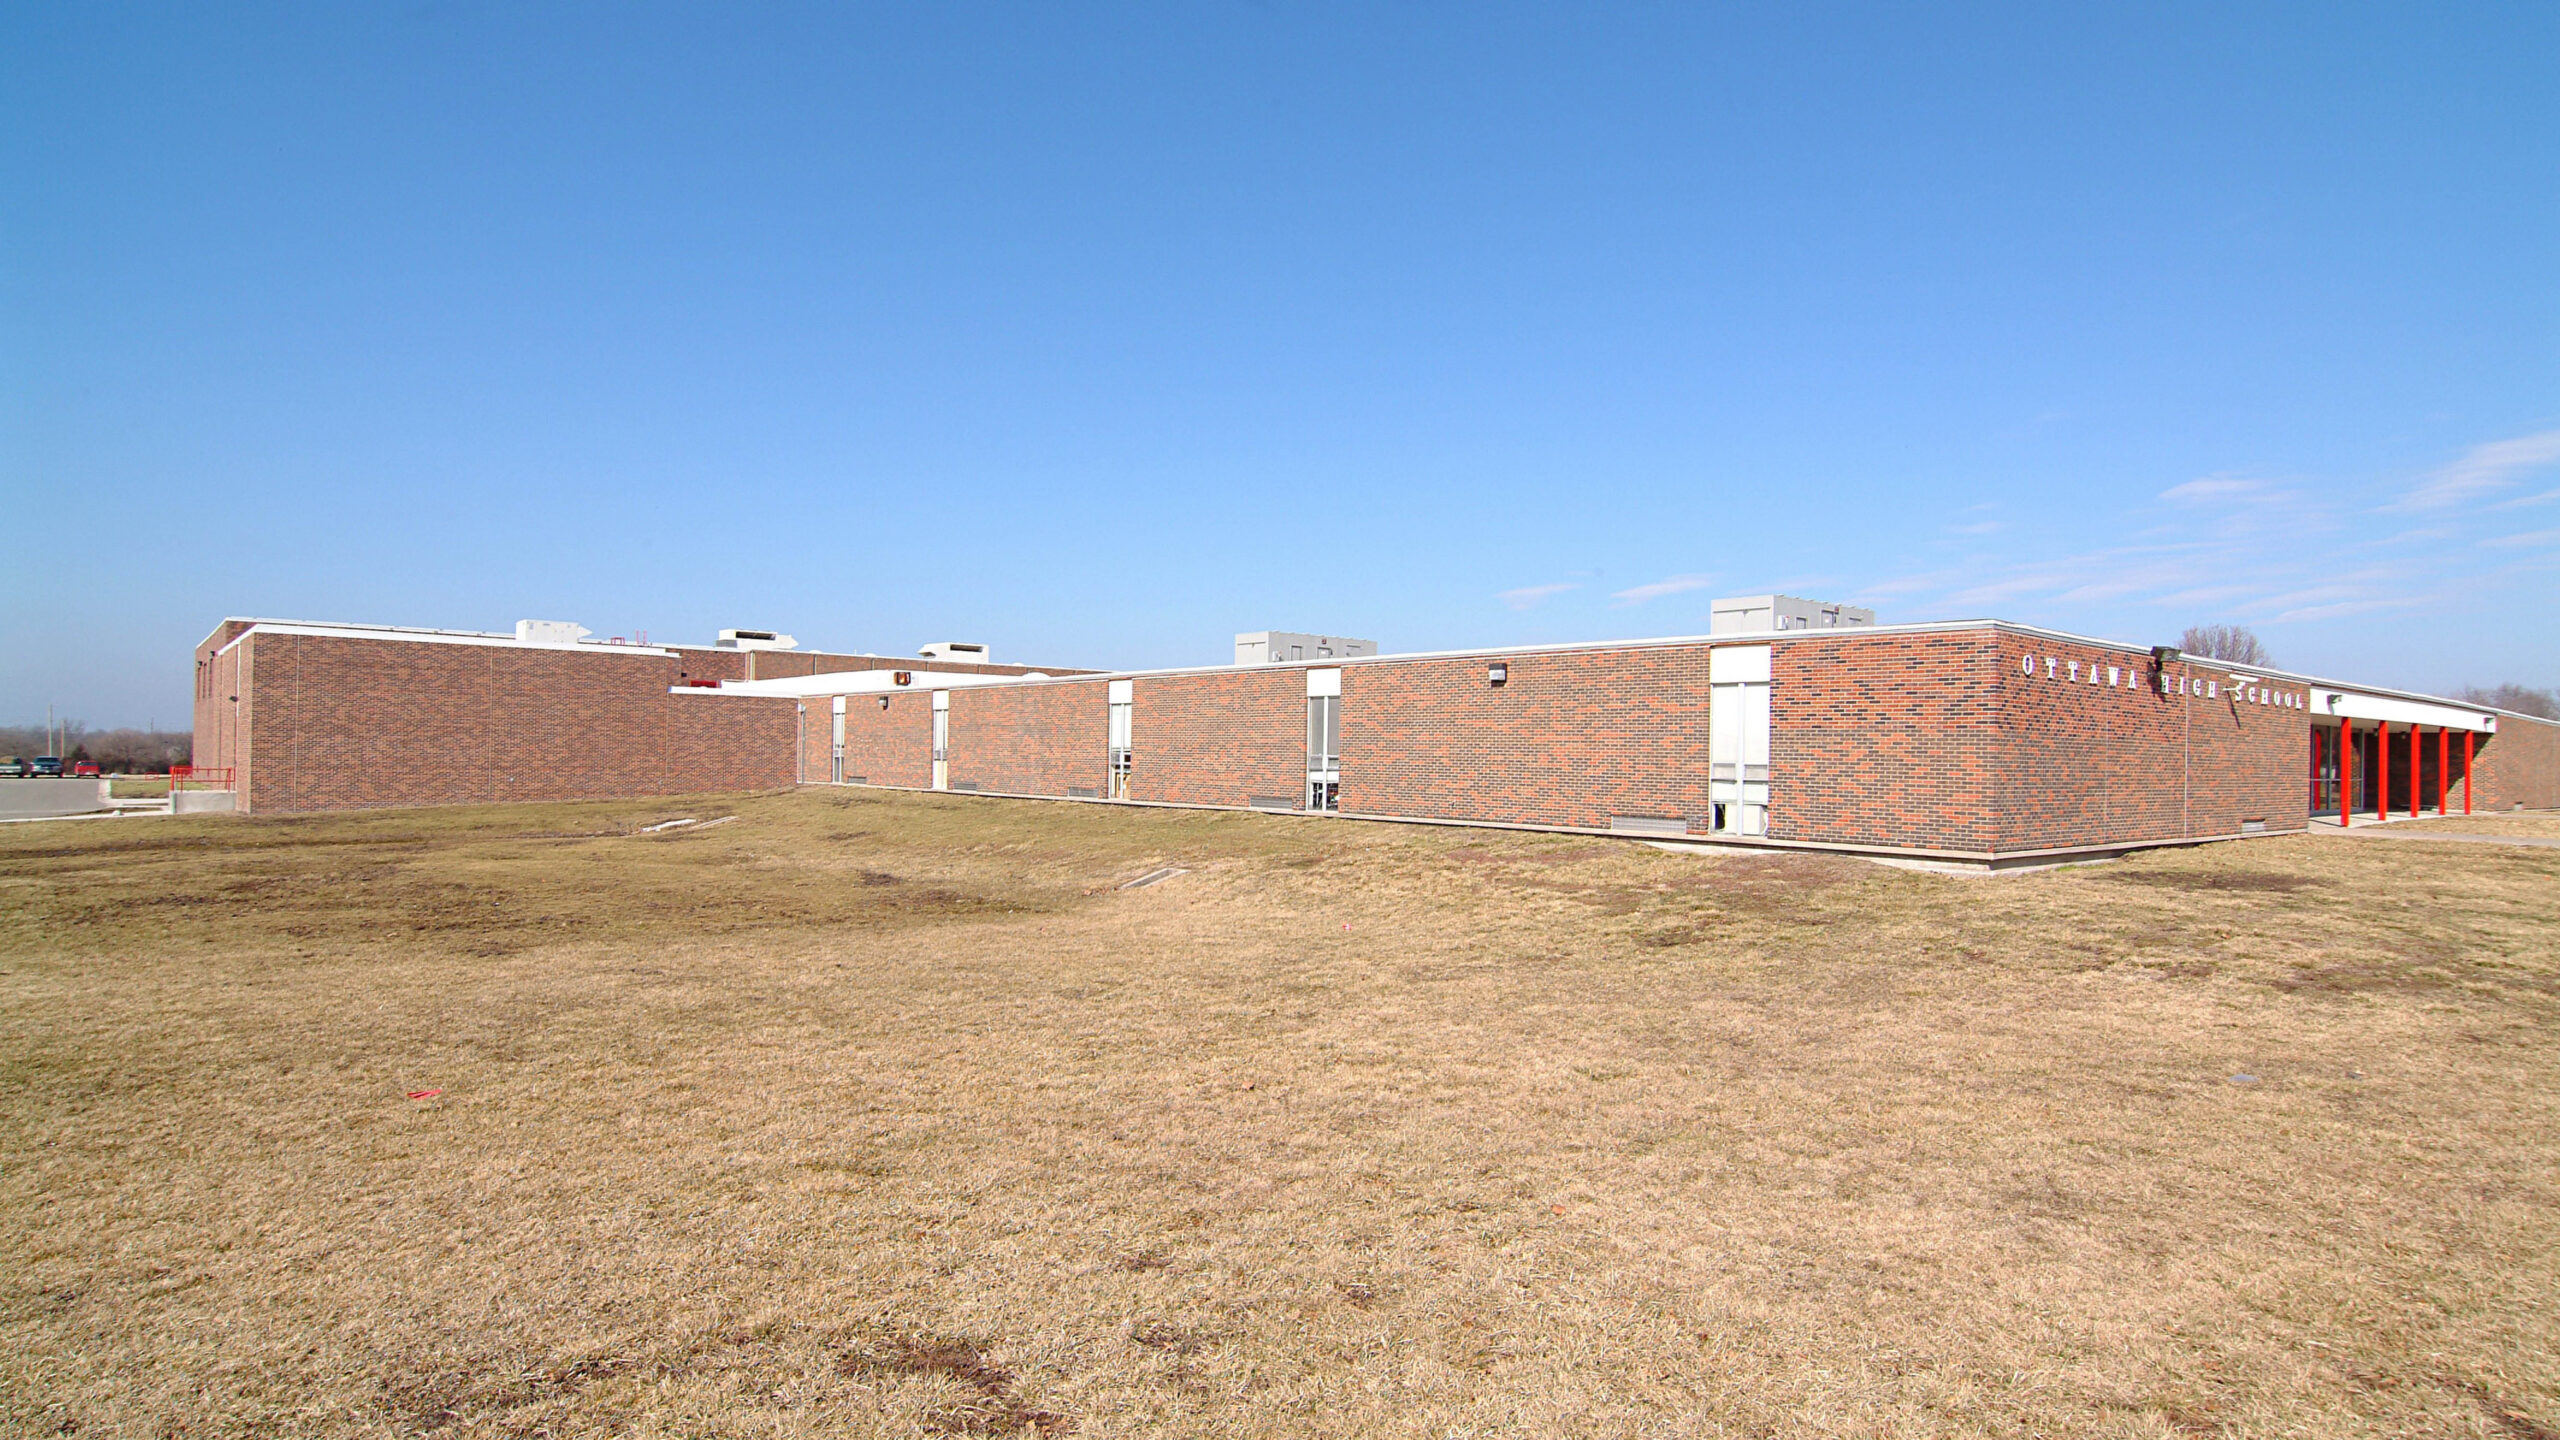 high school with brick exterior